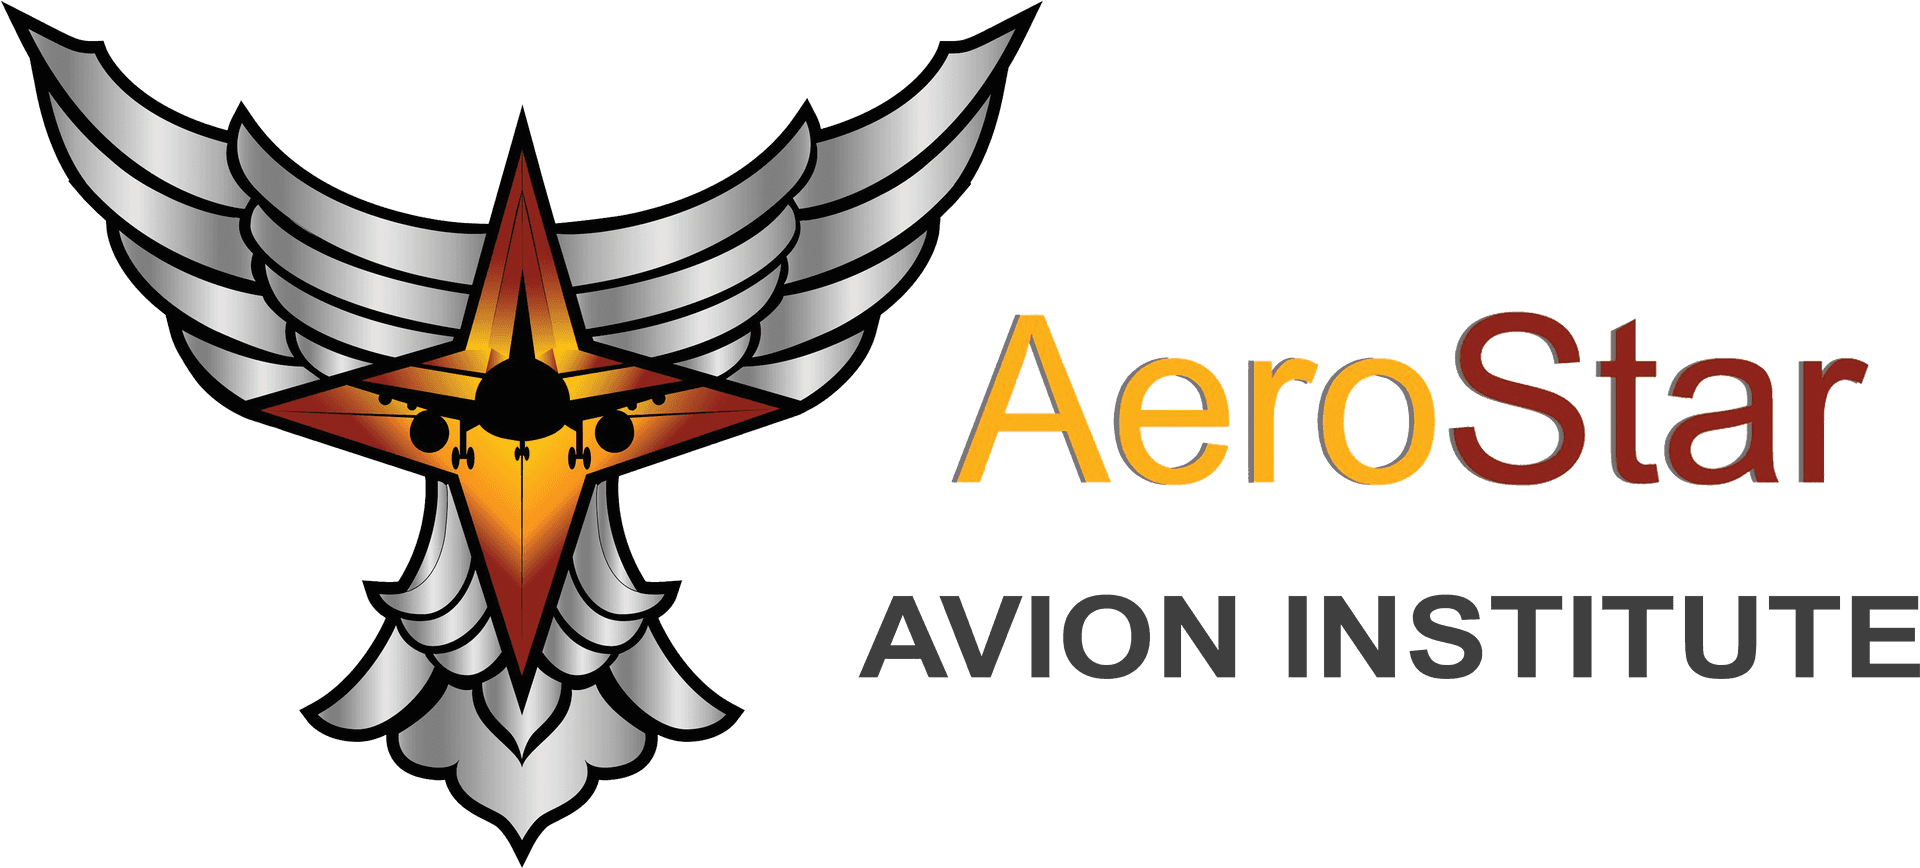 Aero Star Avion Institute Logo PNG